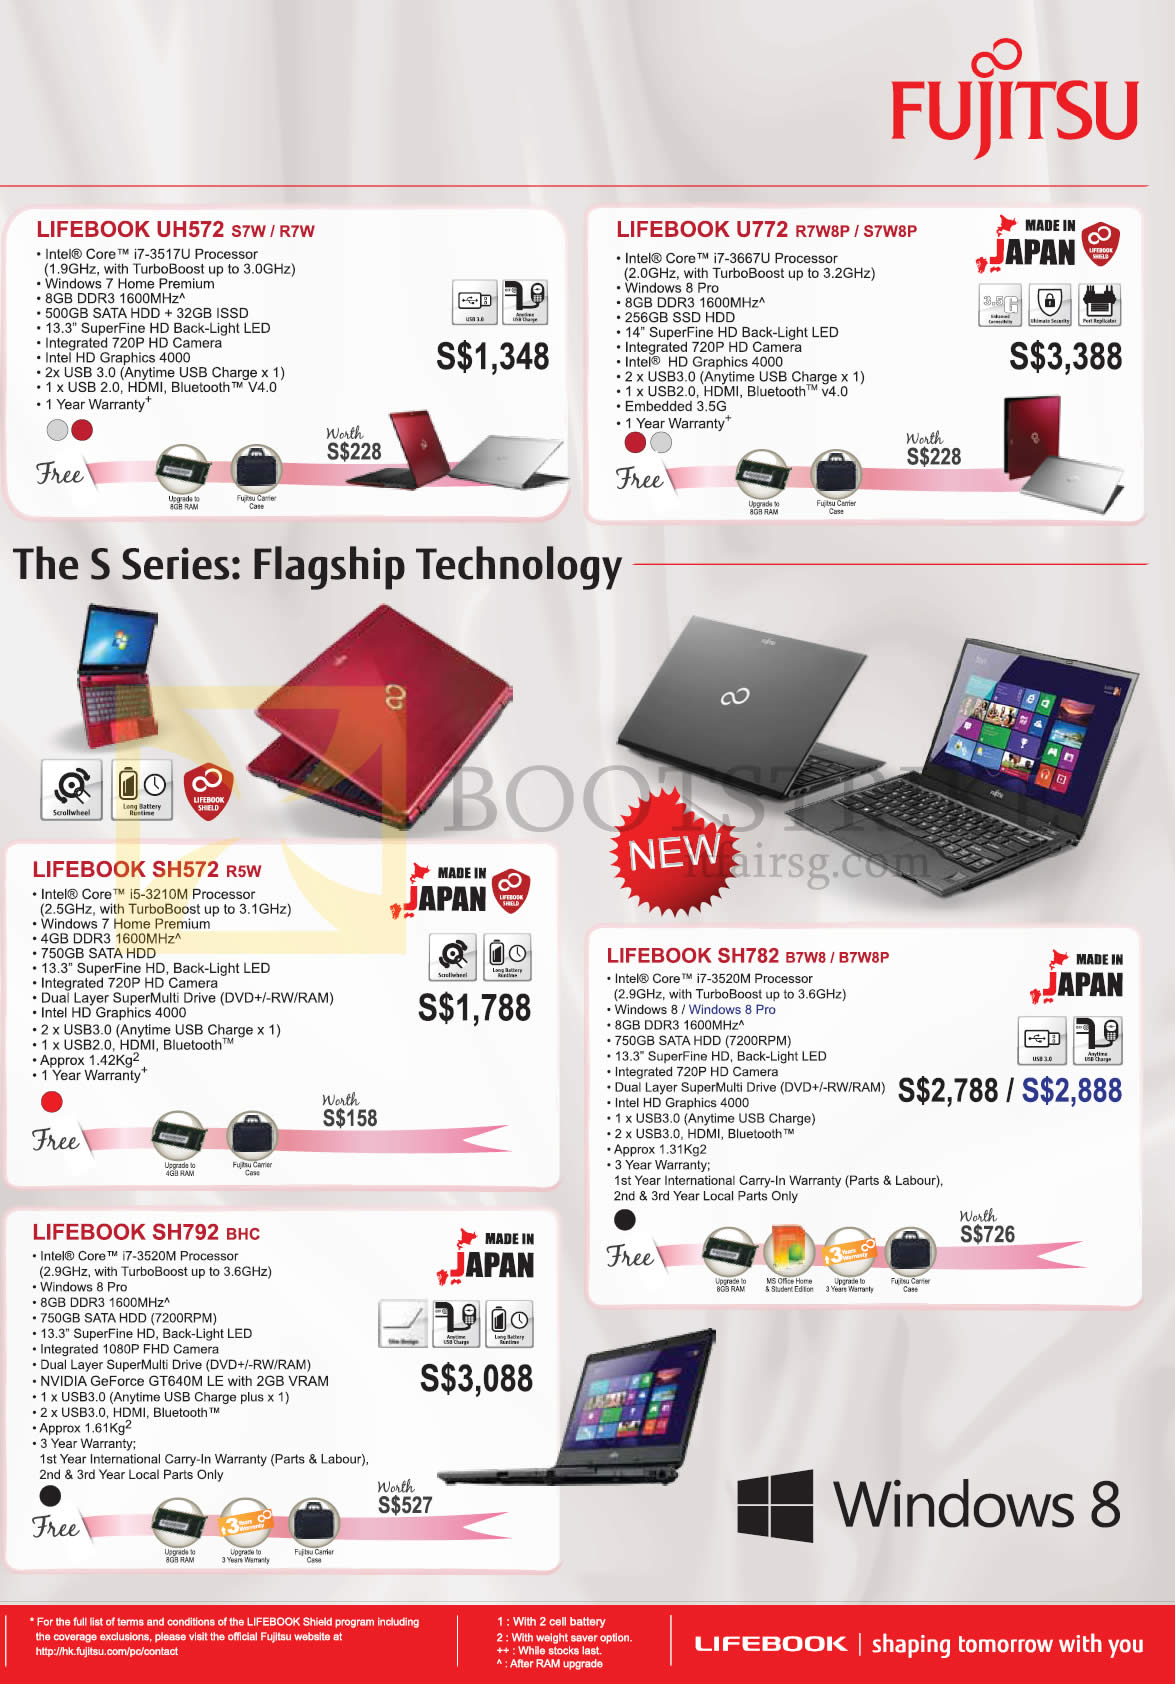 PC SHOW 2013 price list image brochure of Fujitsu Notebooks (Newstead B6028) Lifebook UH572 S7W R7W, U772 R728P S7W8P, SH572 R5W, SH782 B7W8 B7W8P, SH792 BHC